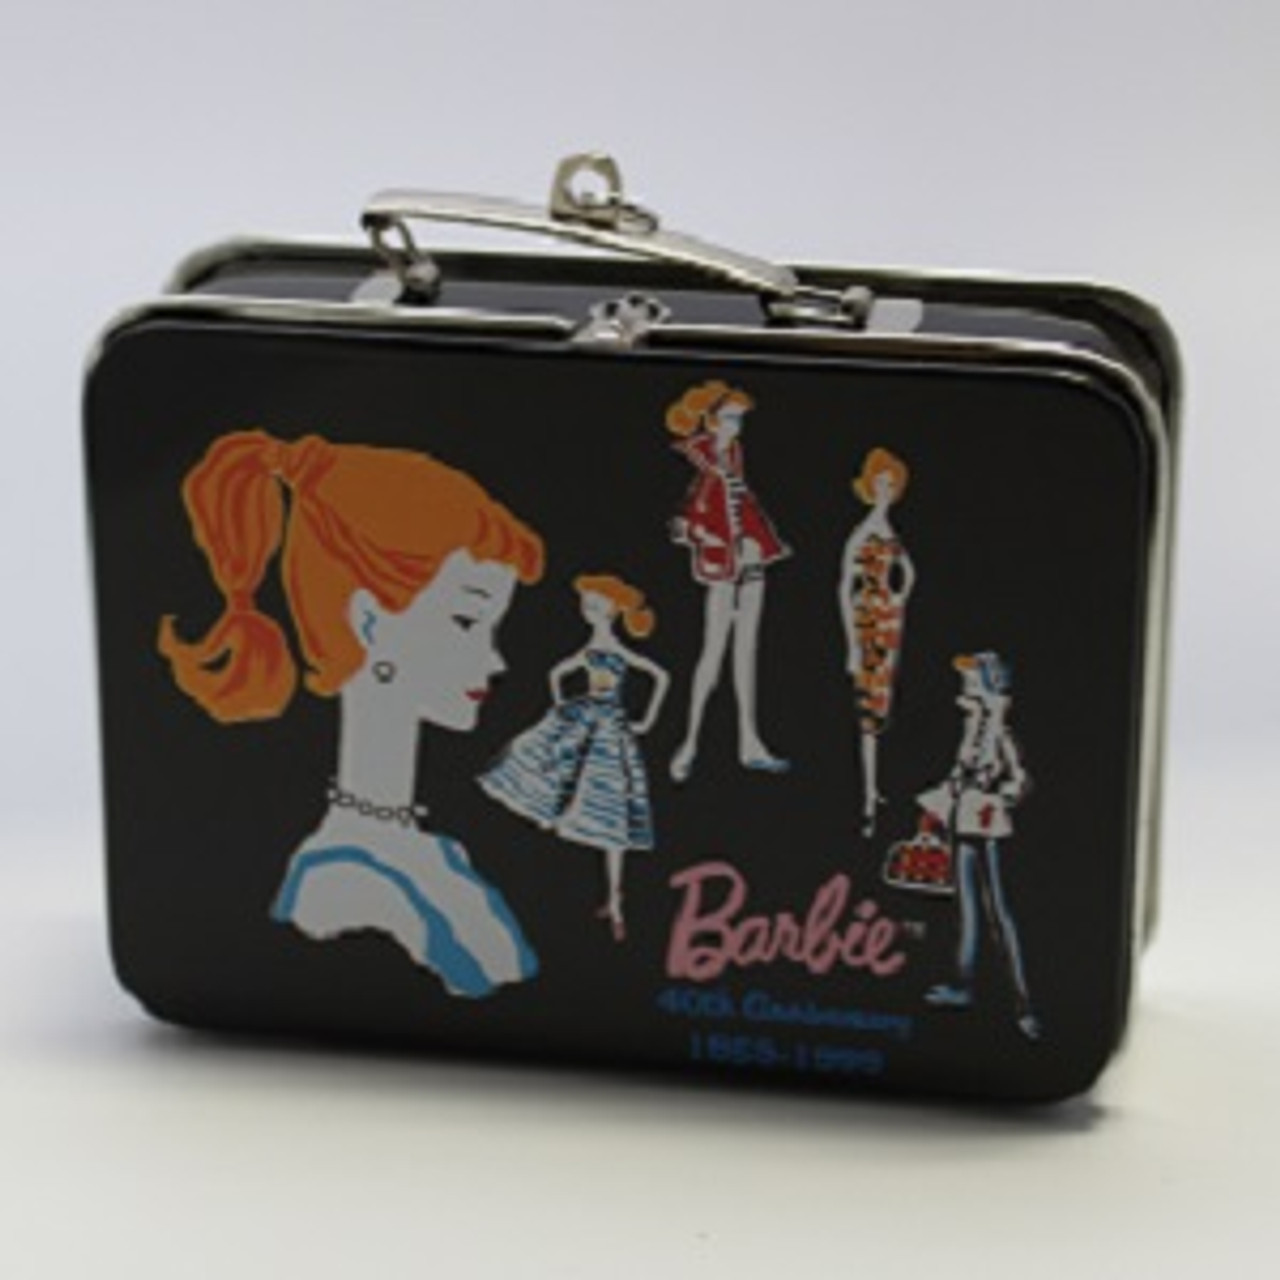 40th Anniversary Edition Barbie Lunchbox 1999 Hallmark Keepsake Ornament